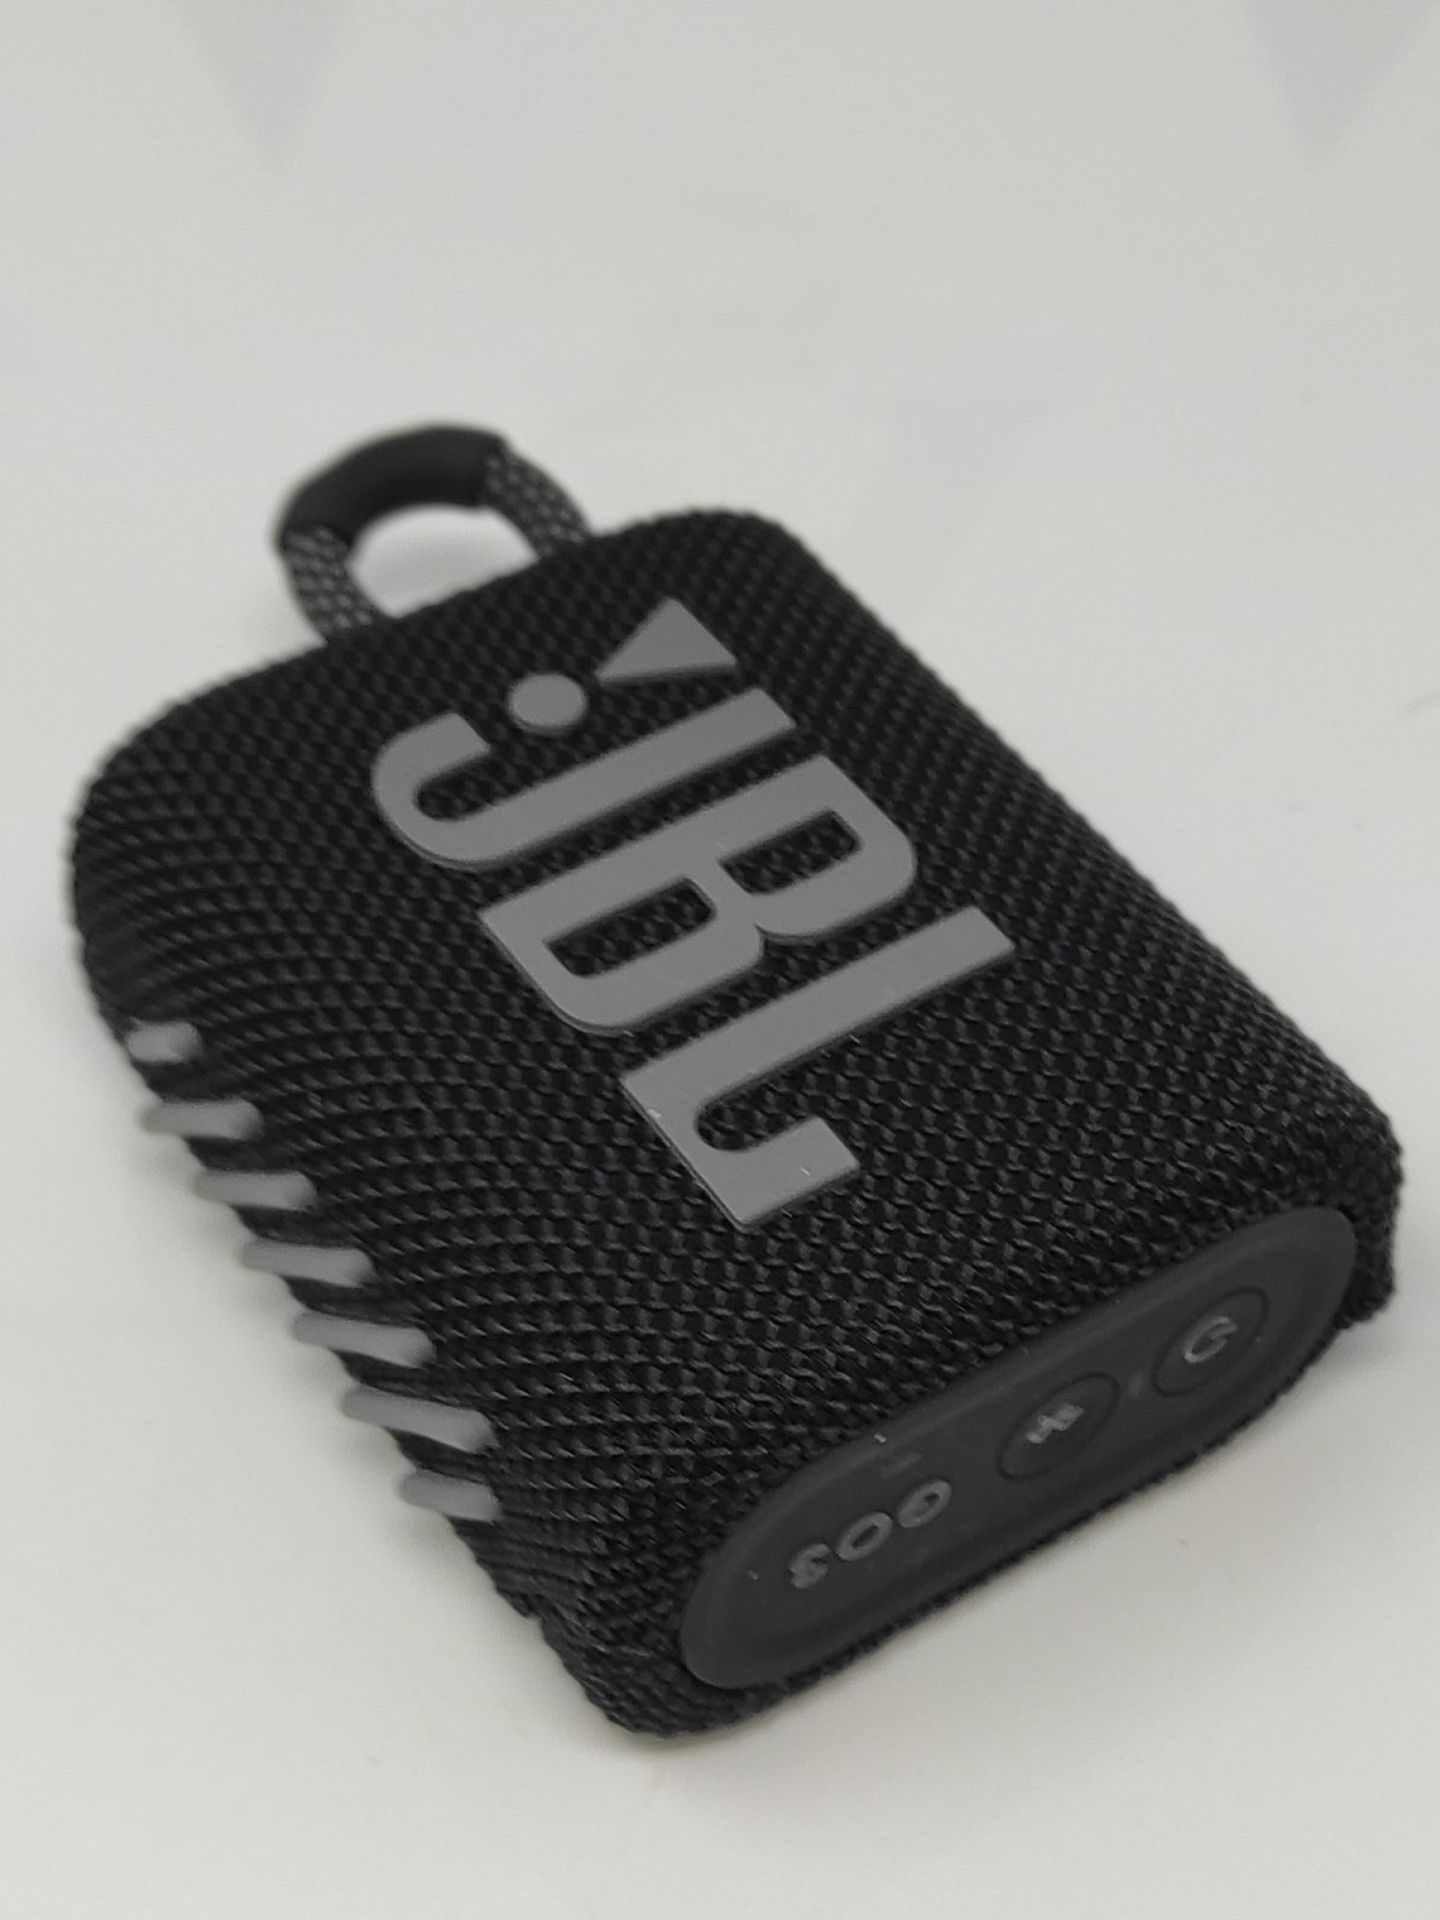 JBL GO 3 Portable Bluetooth Speaker, Wireless Speaker with Compact Design, Waterproof - Image 3 of 3